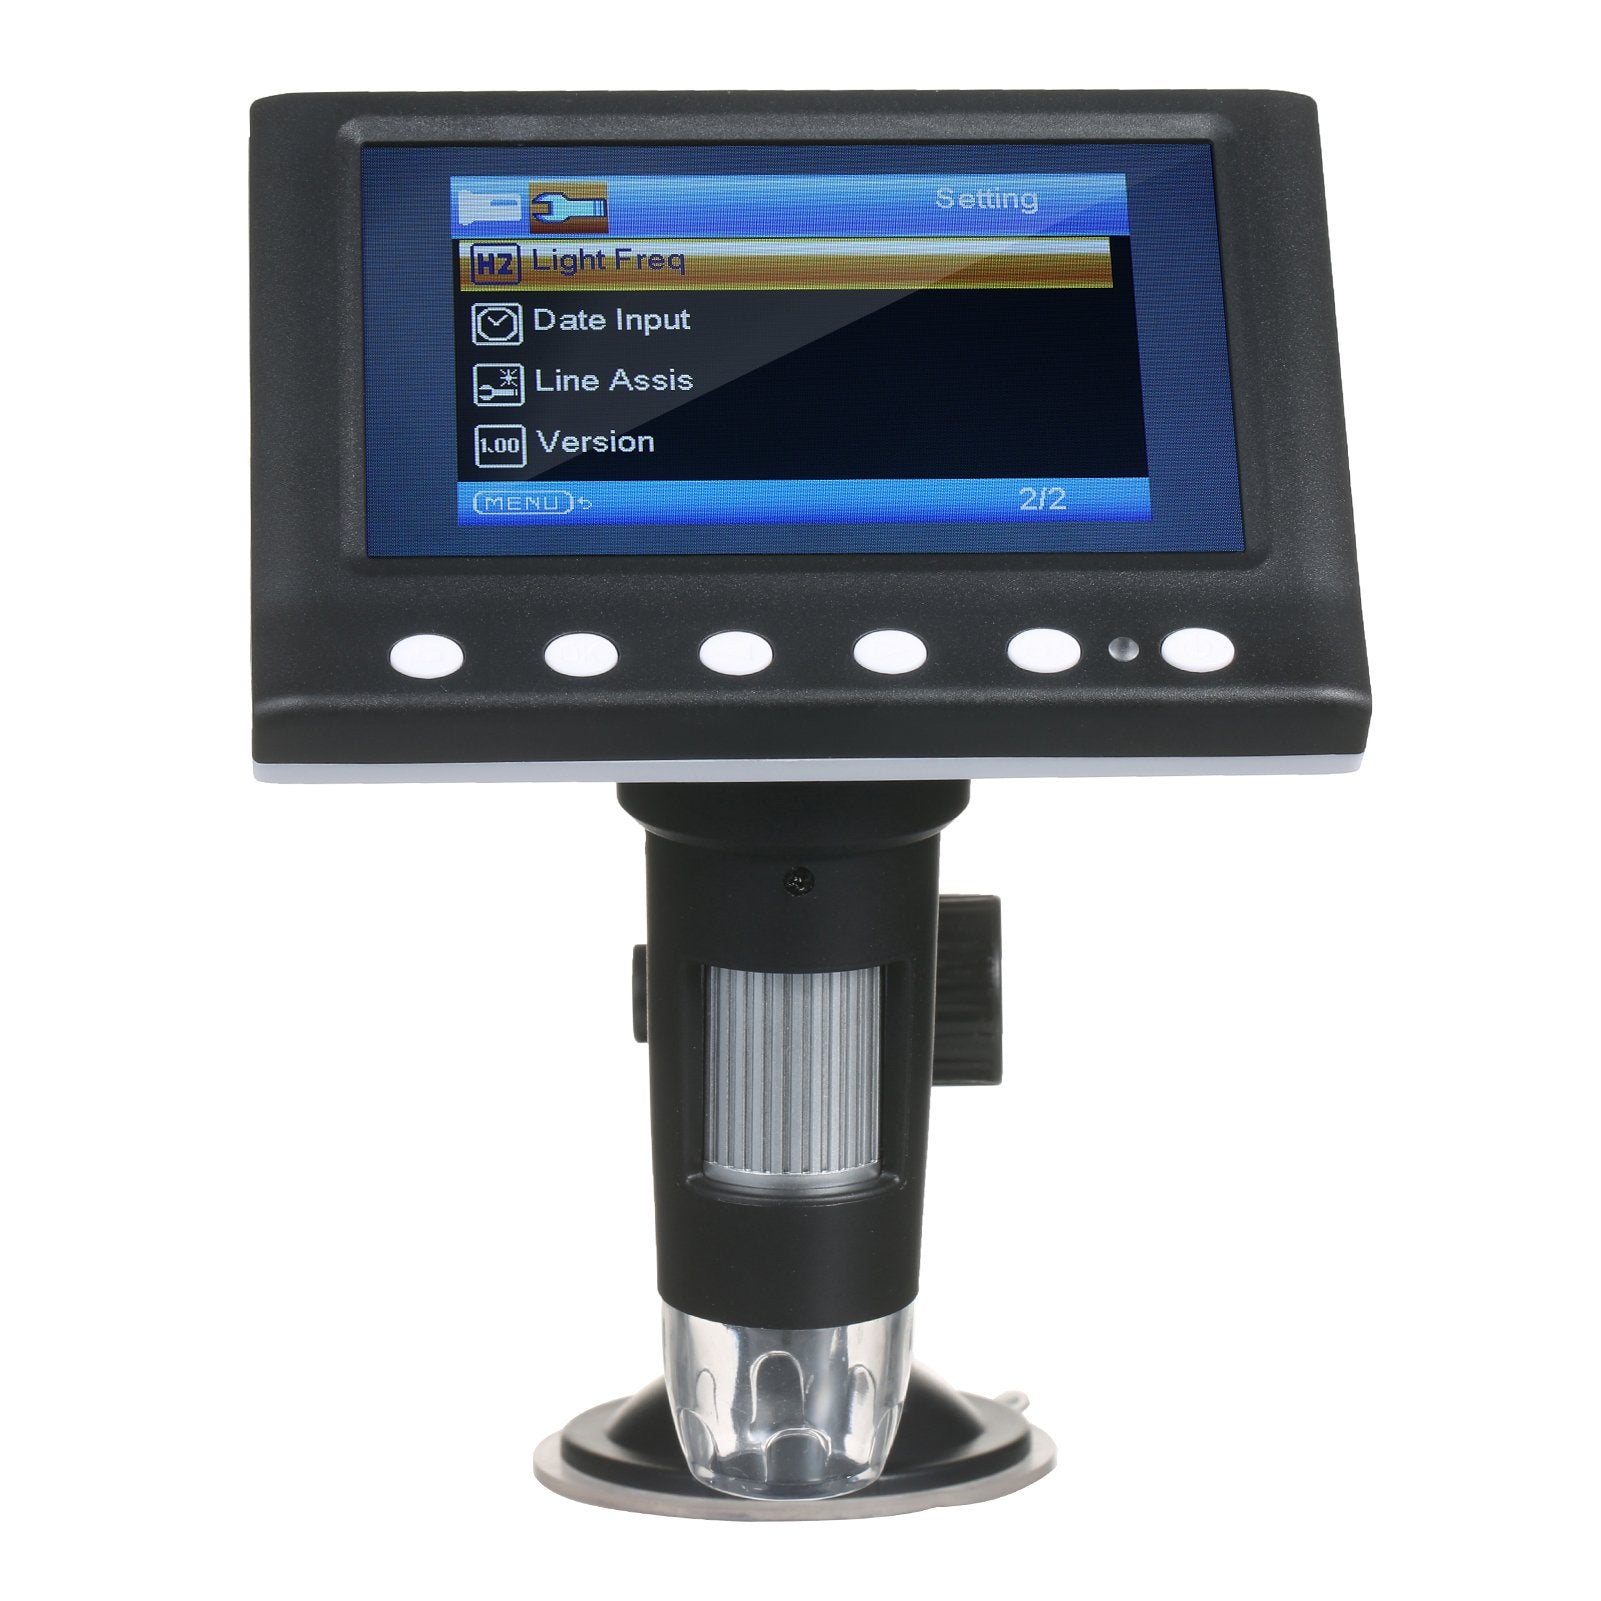 Scientific USB / Digital Electron Microscope - Westfield Retailers